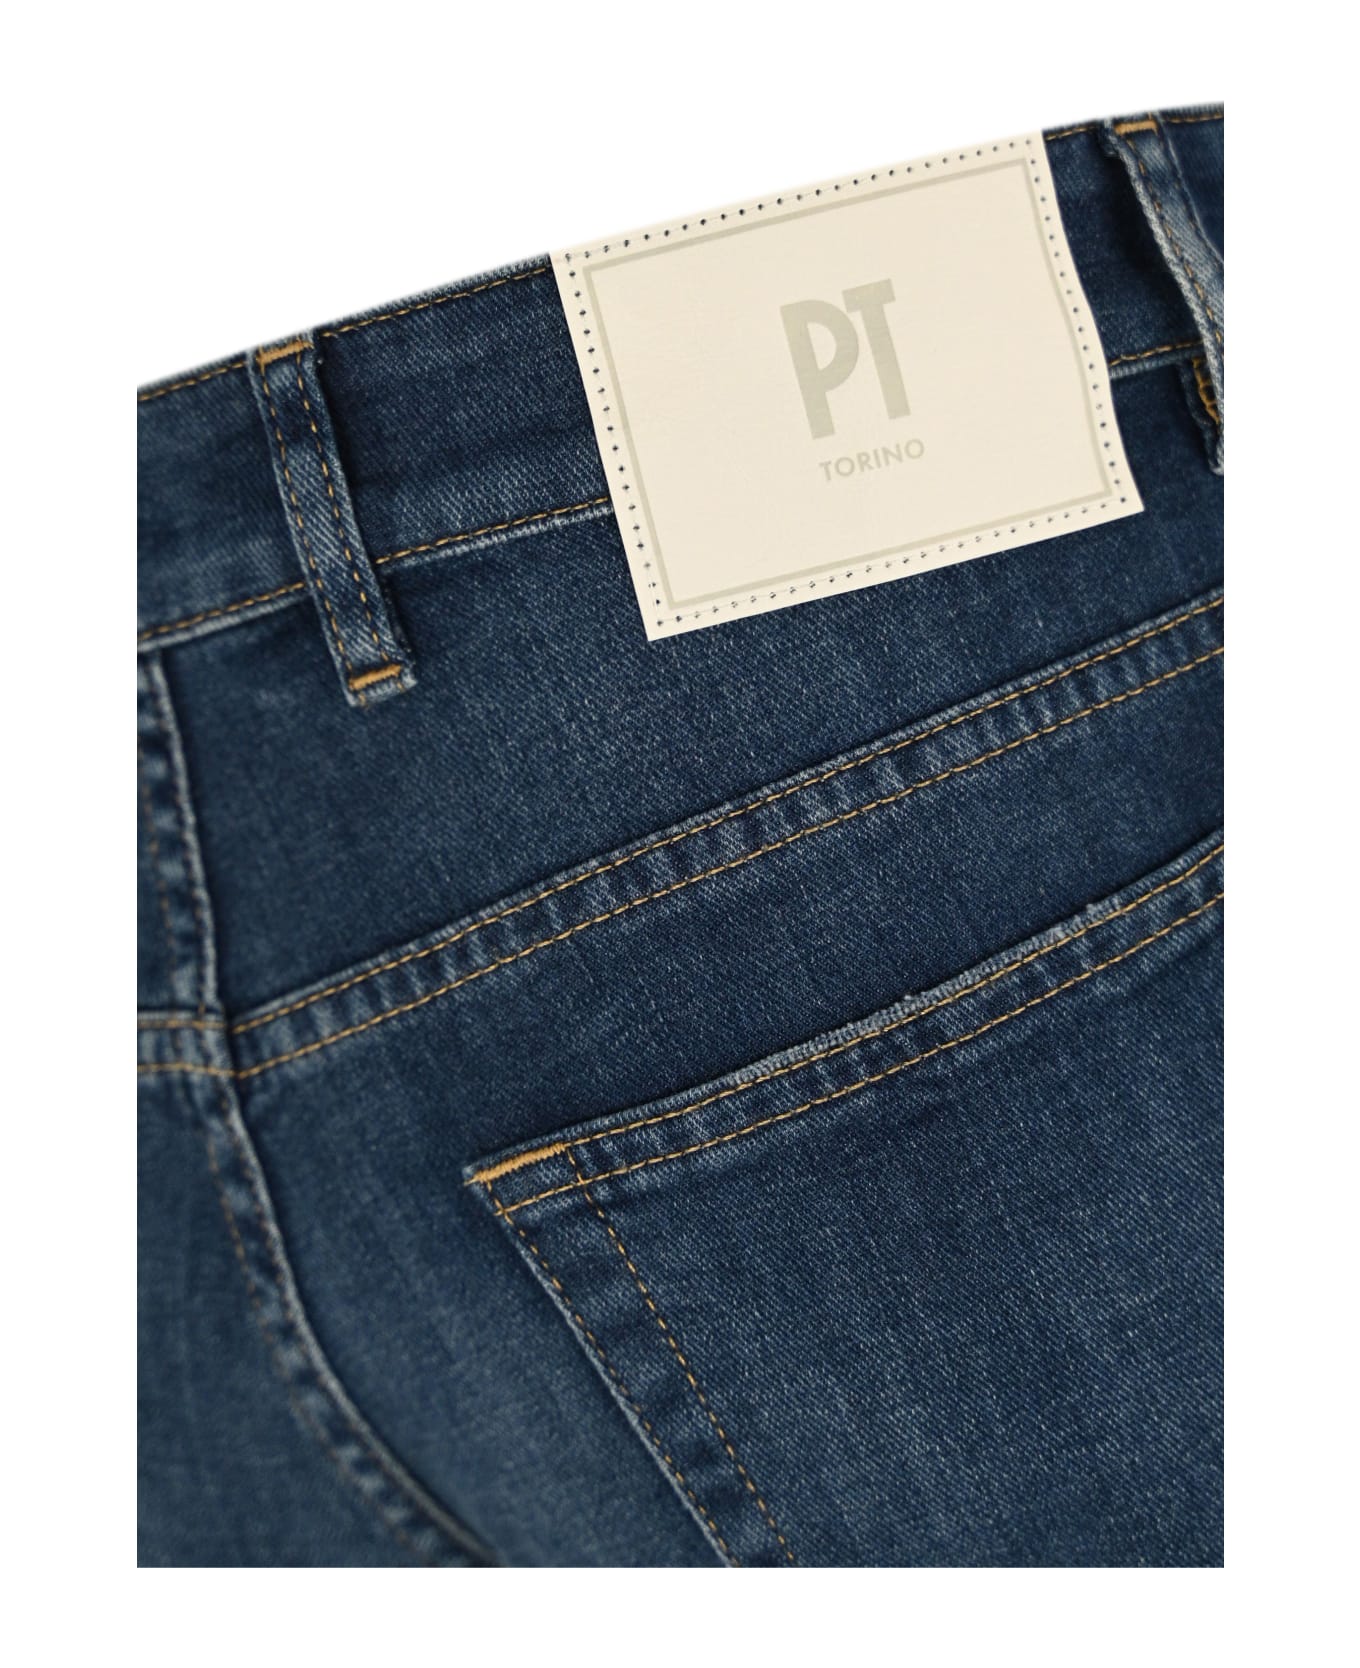 PT Torino Indie 5 Pocket Jeans - Denim